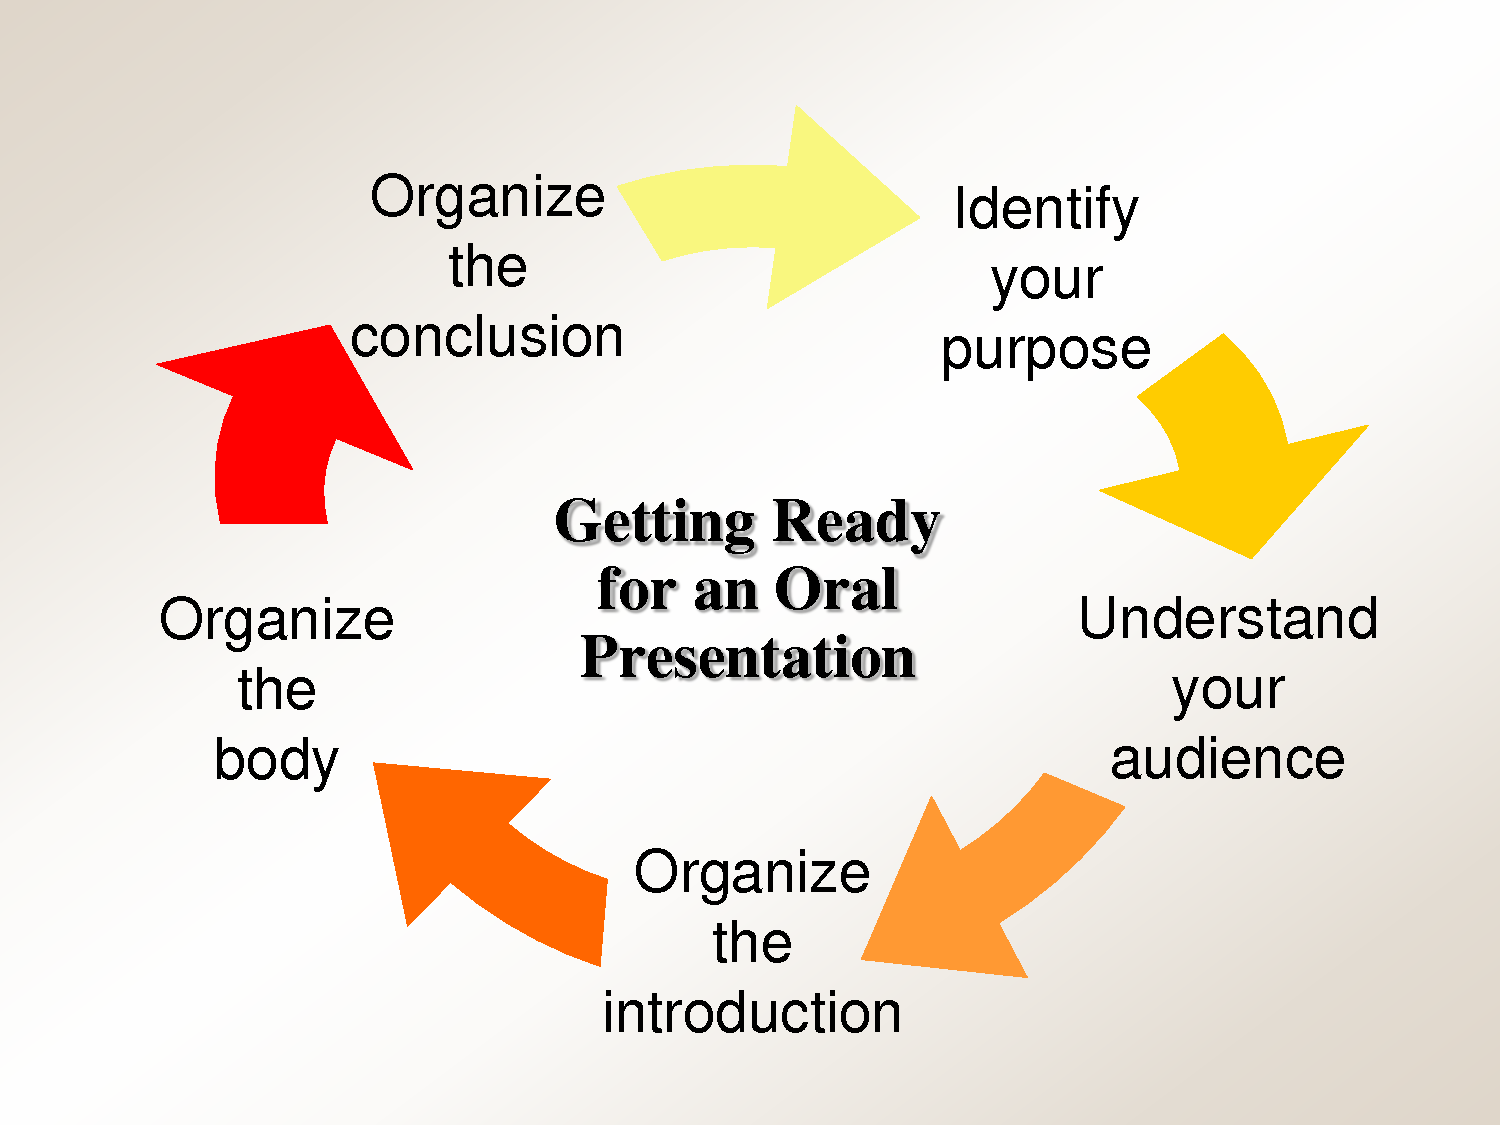 structure of oral presentation pdf